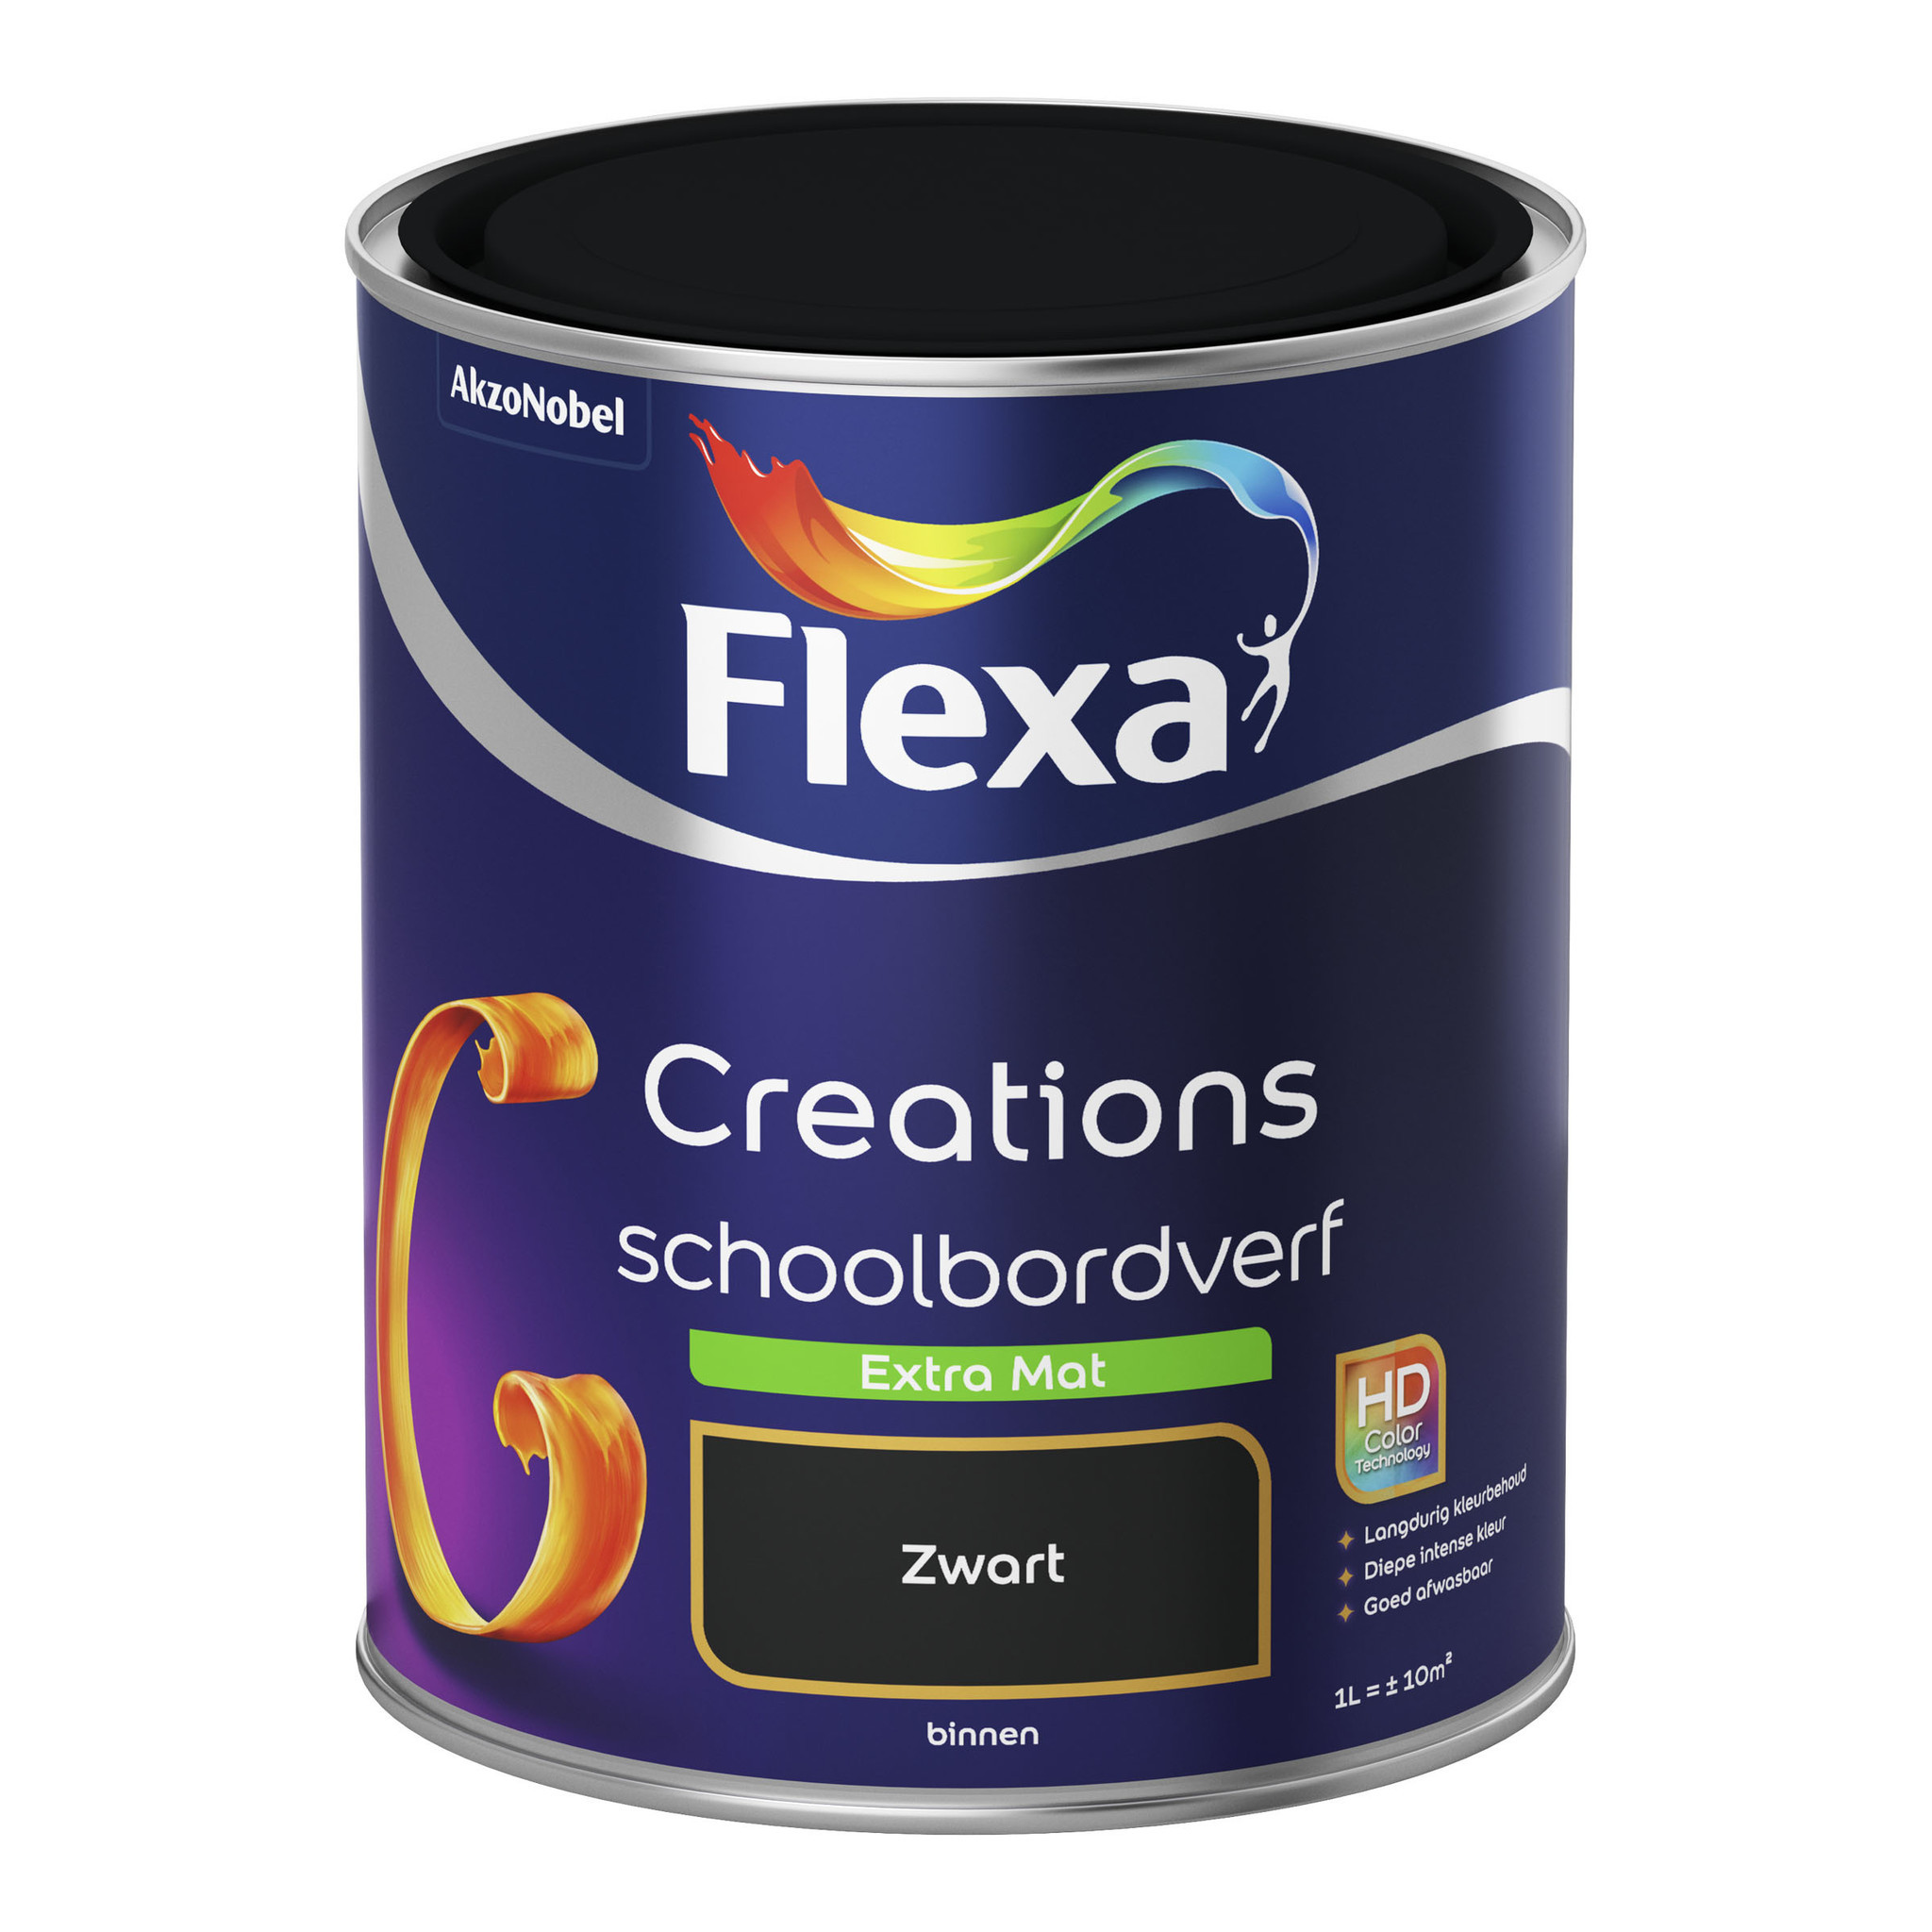 Flexa Creations Schoolbordverf